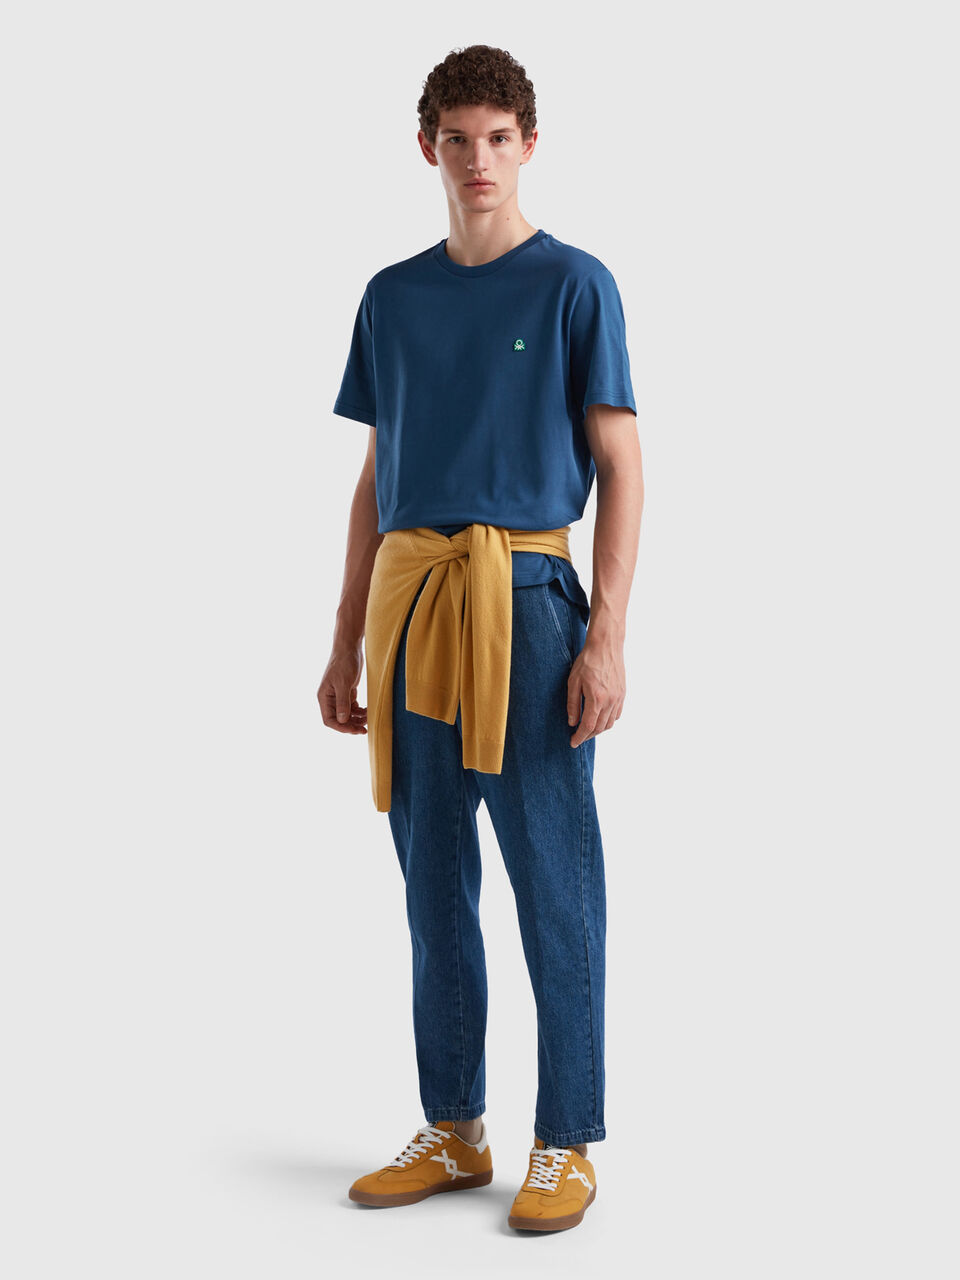 cotton | Force organic Blue 100% Benetton Air t-shirt - basic